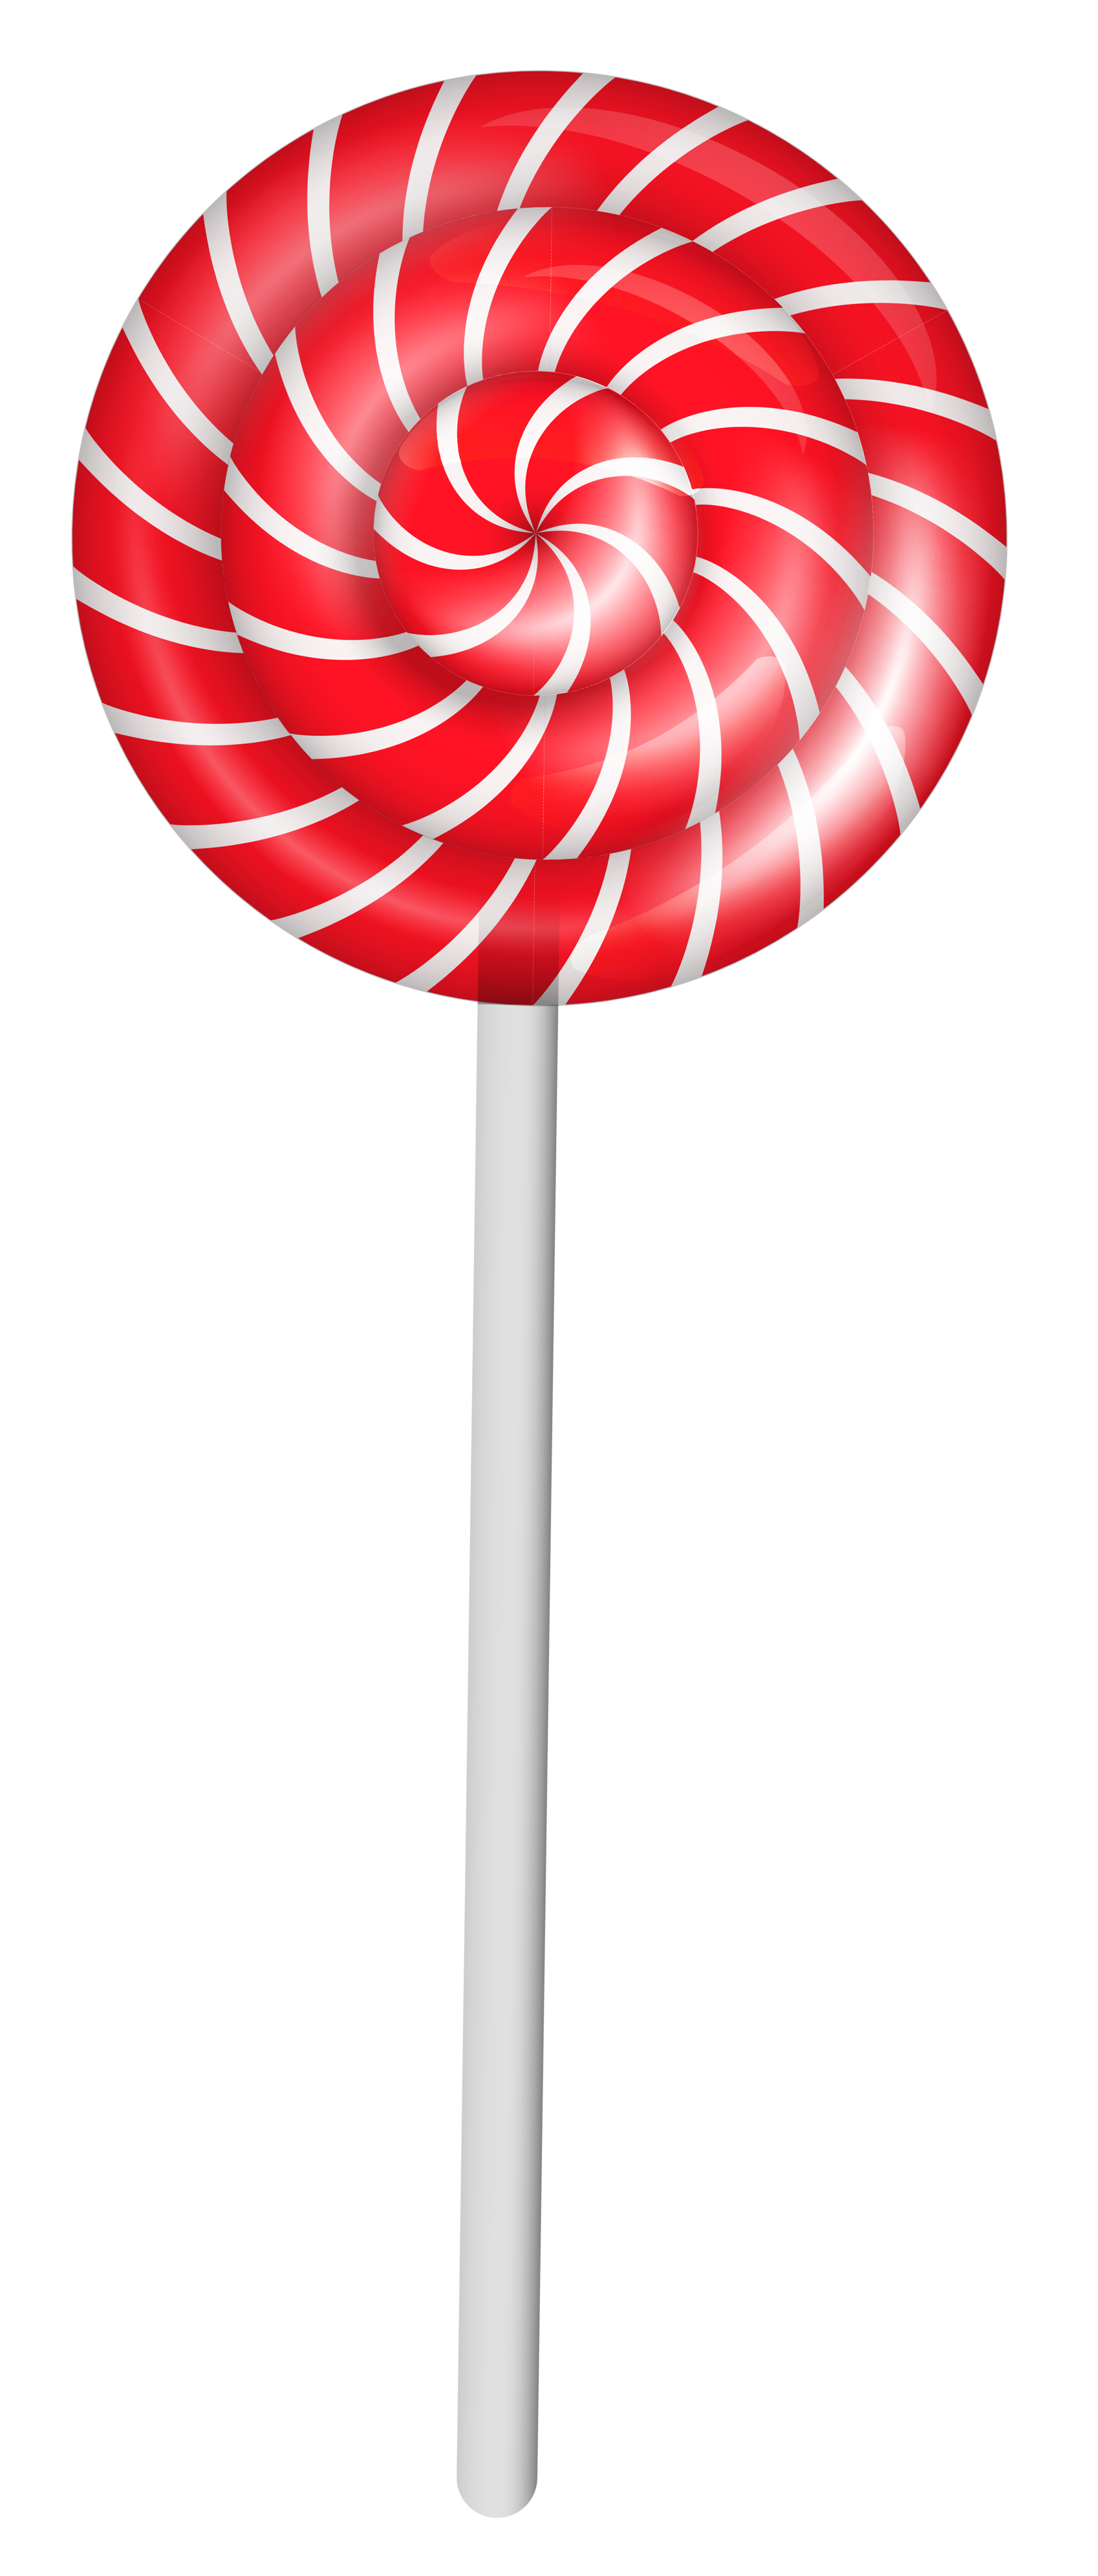 Striped lollipop clipart picture 5